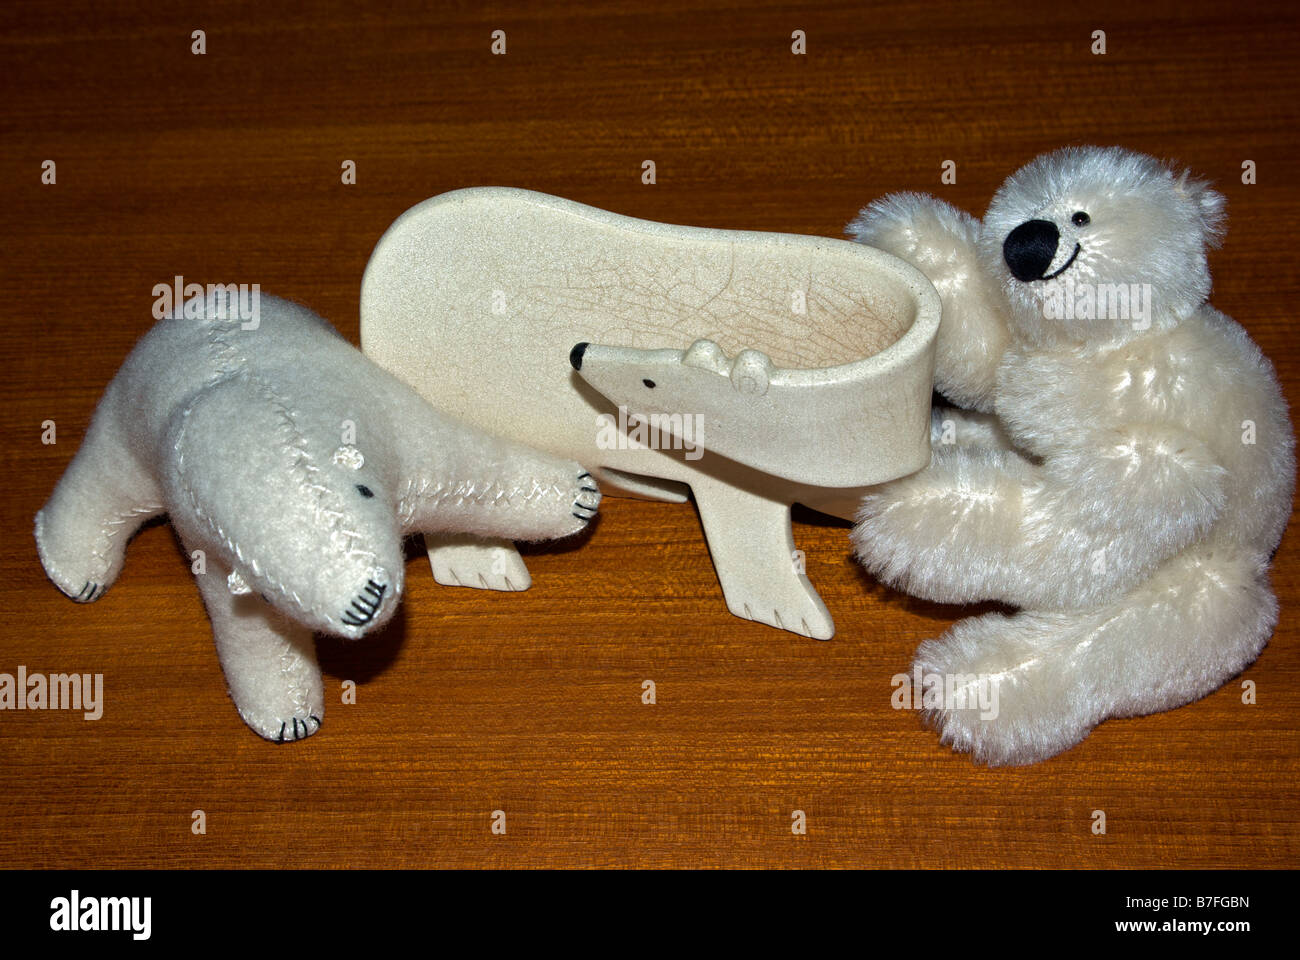 Ceramic and stuffed toy polar bears on teakwood table Stock Photo